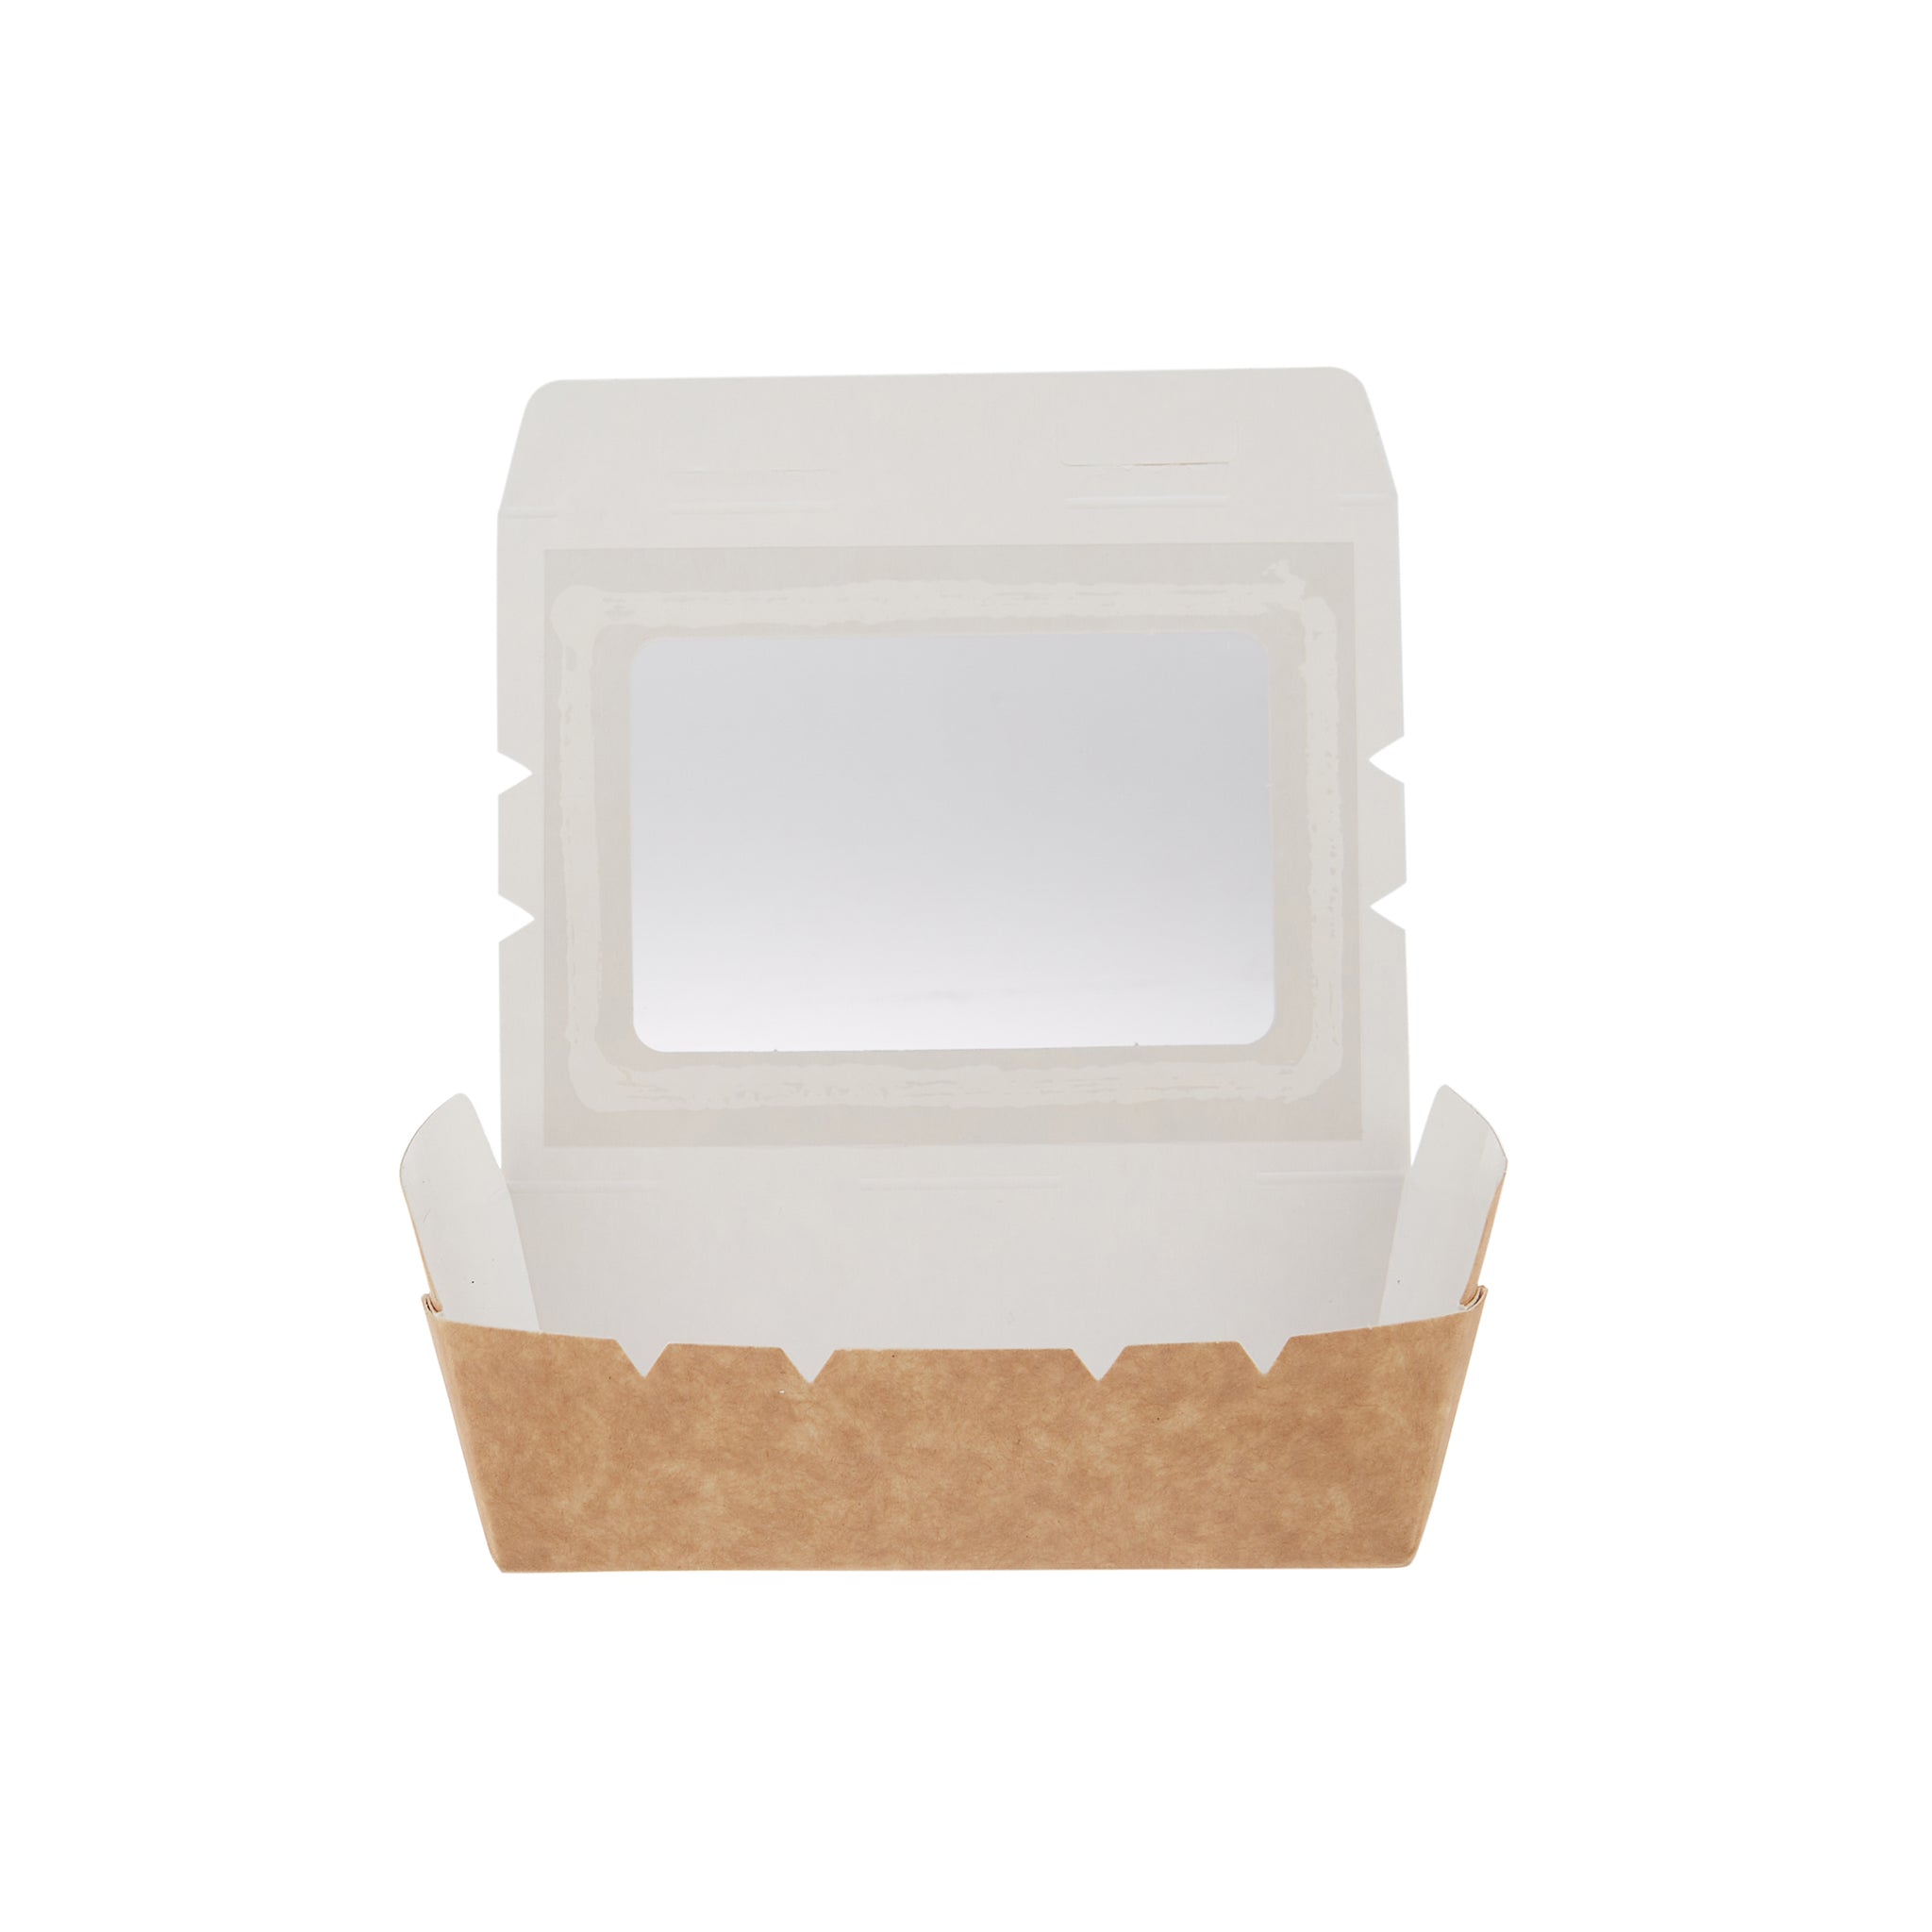 Kraft Brown Top Lunch Box with Window - Hotpack Saudi